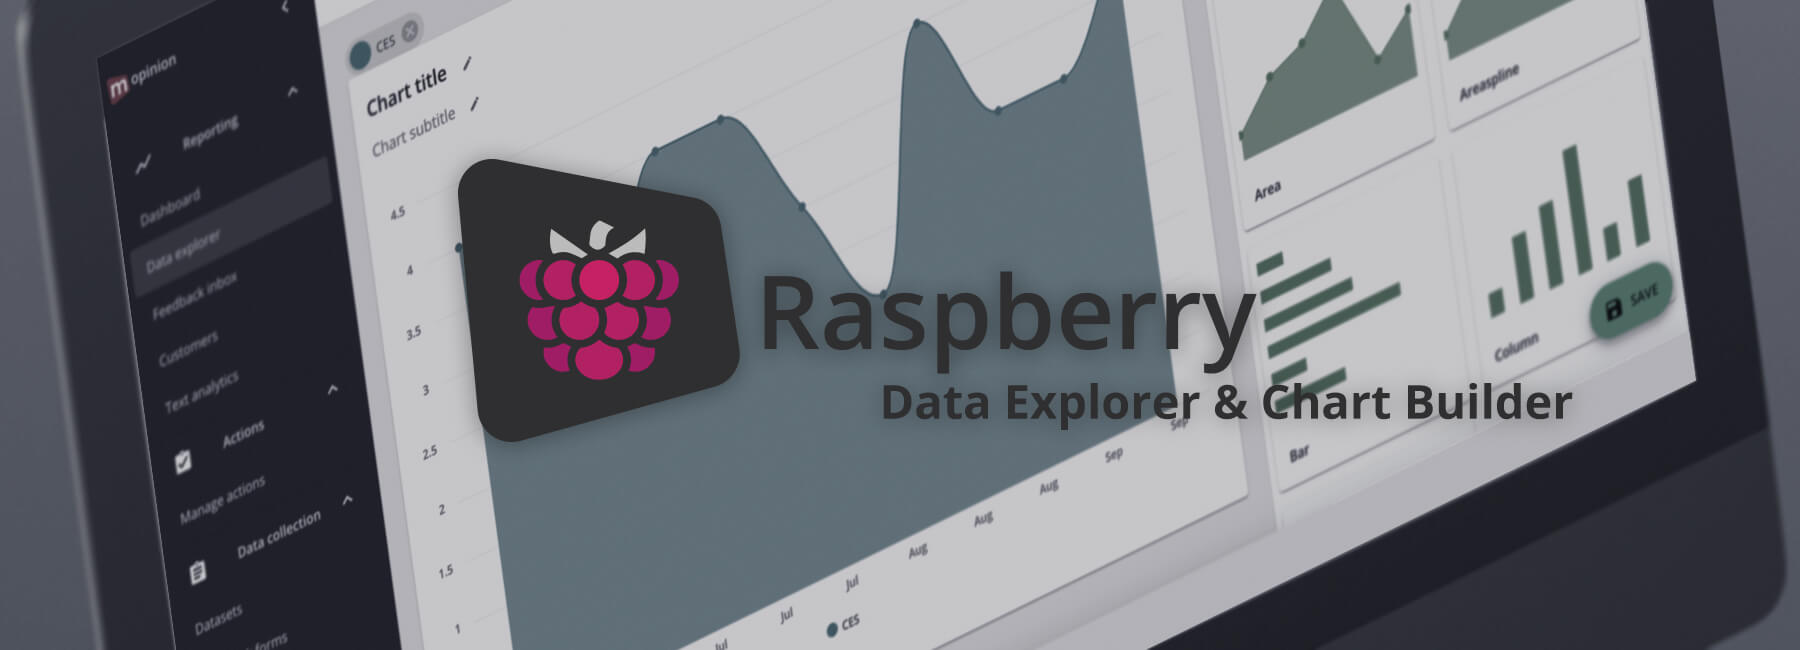 Unmasking Mopinion Raspberry: Data Explorer & Chart Builder